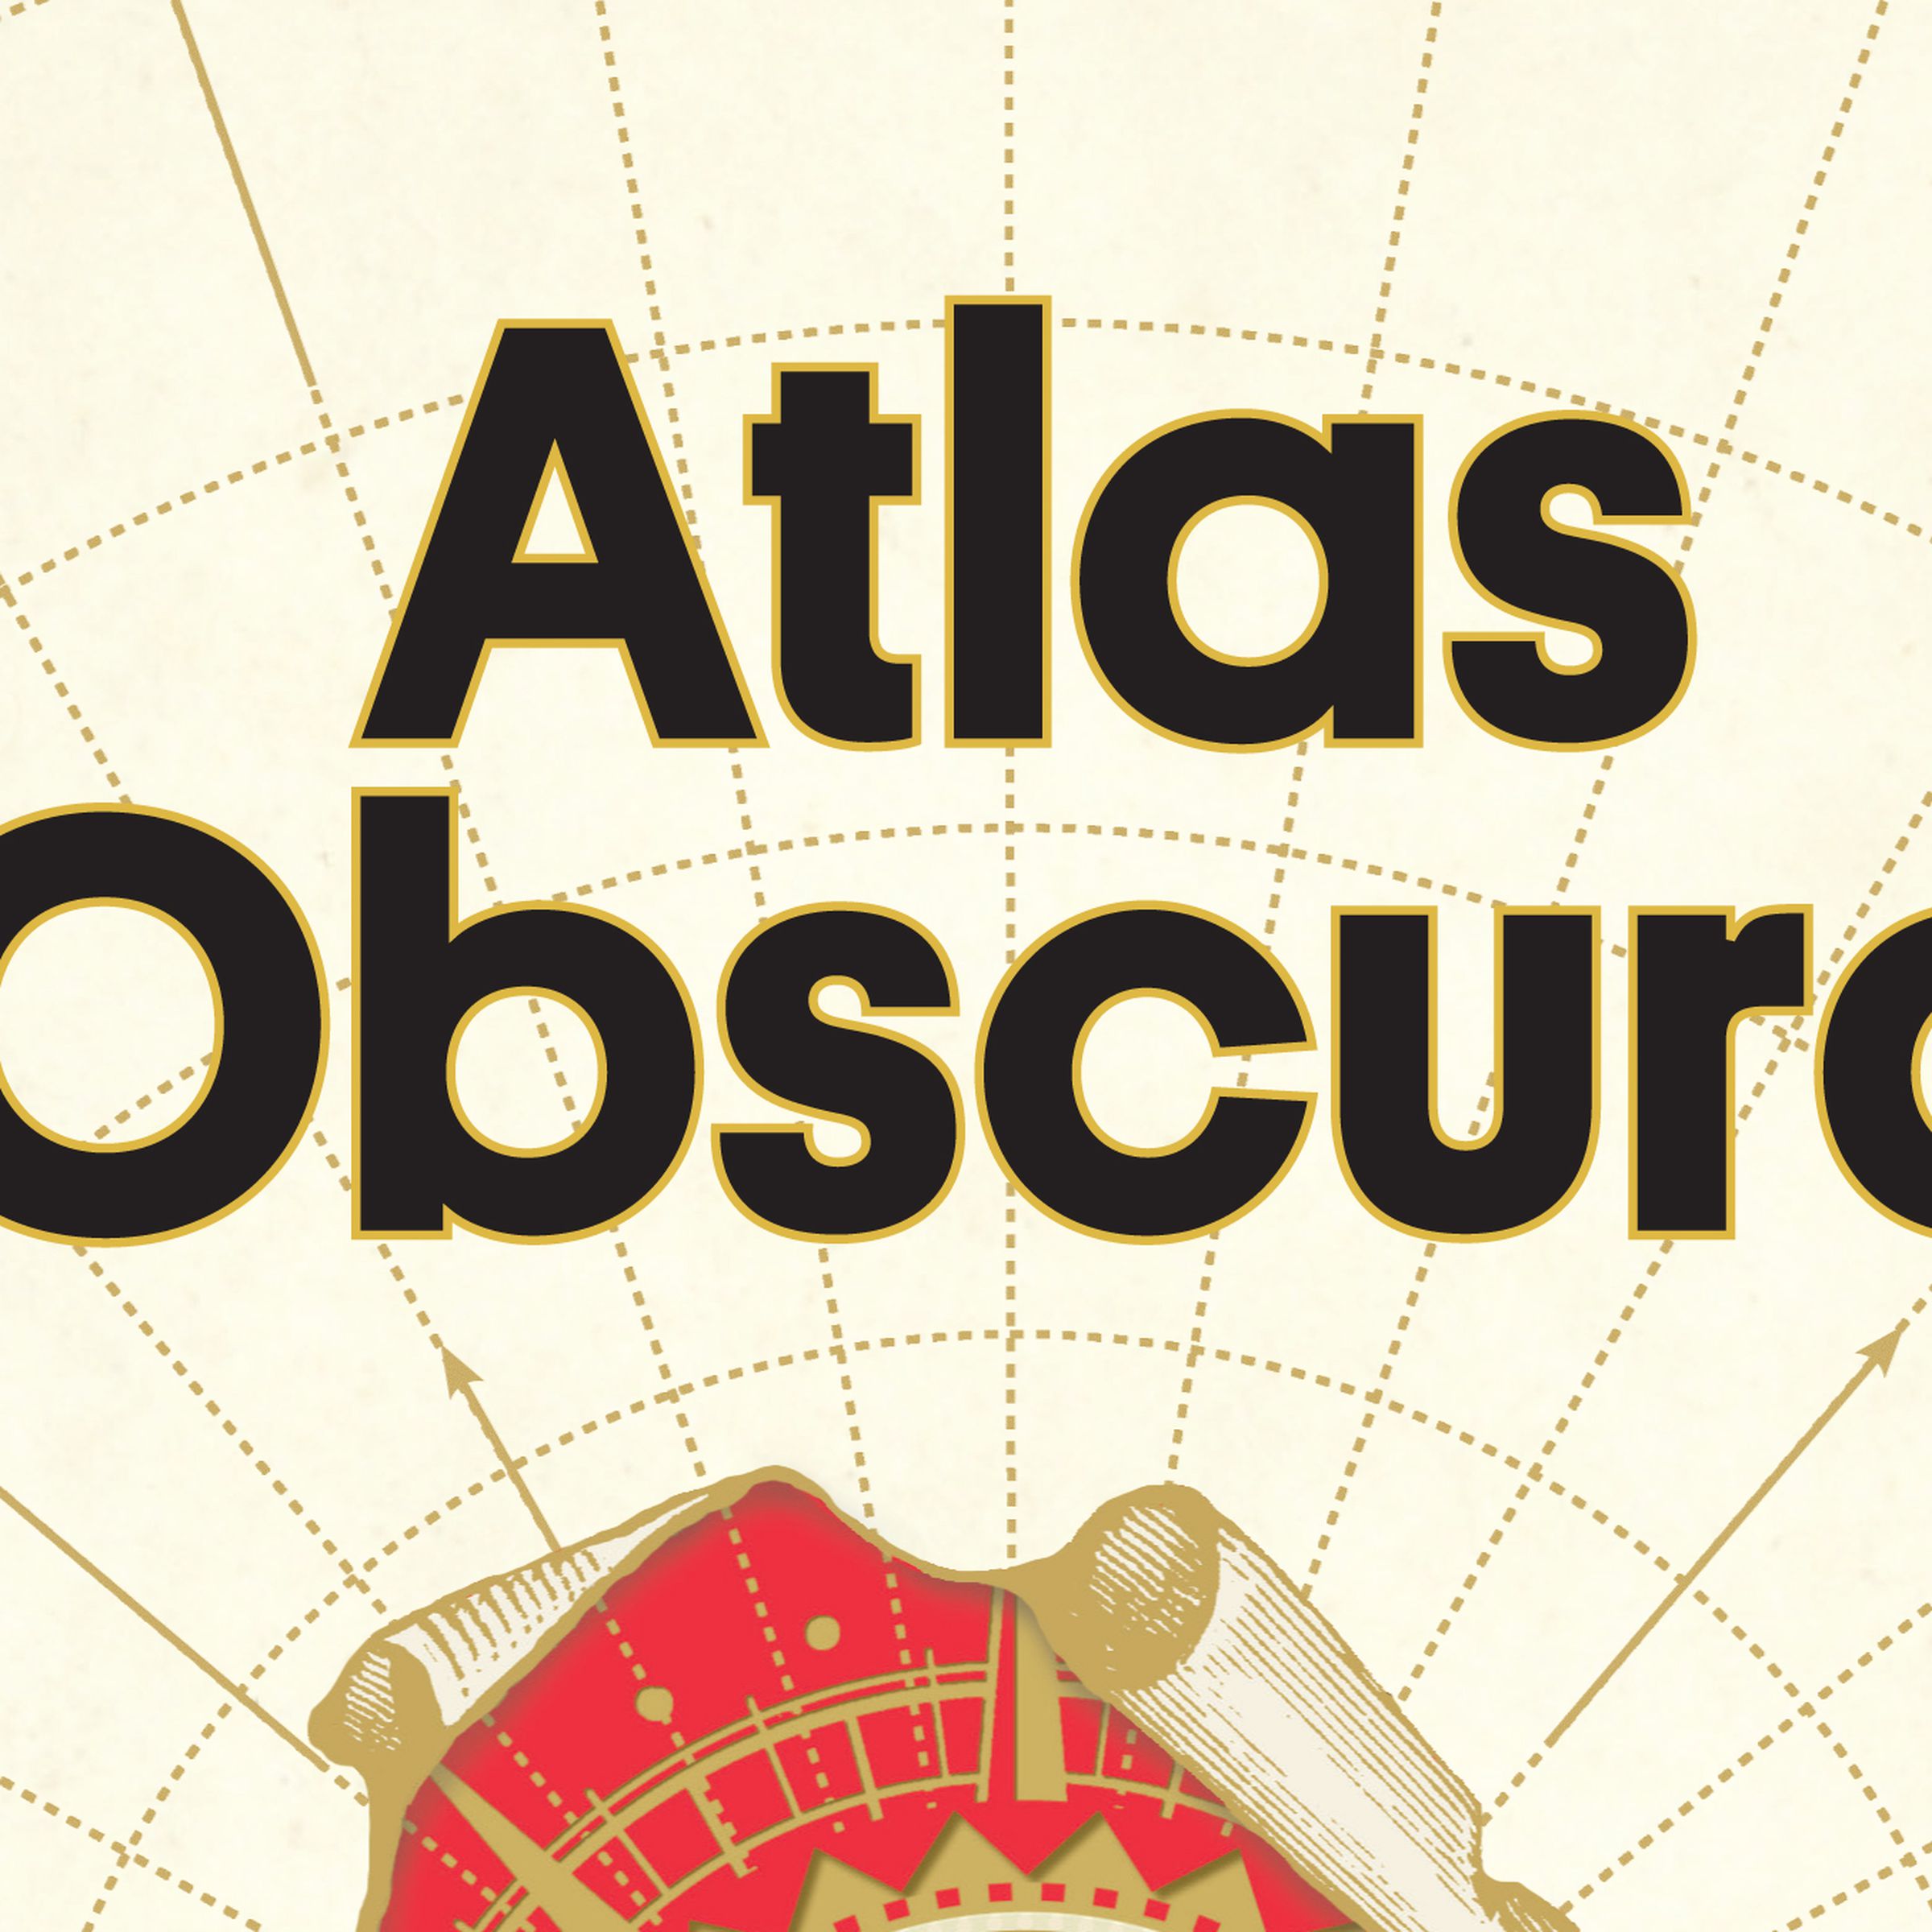 atlas obscura book review